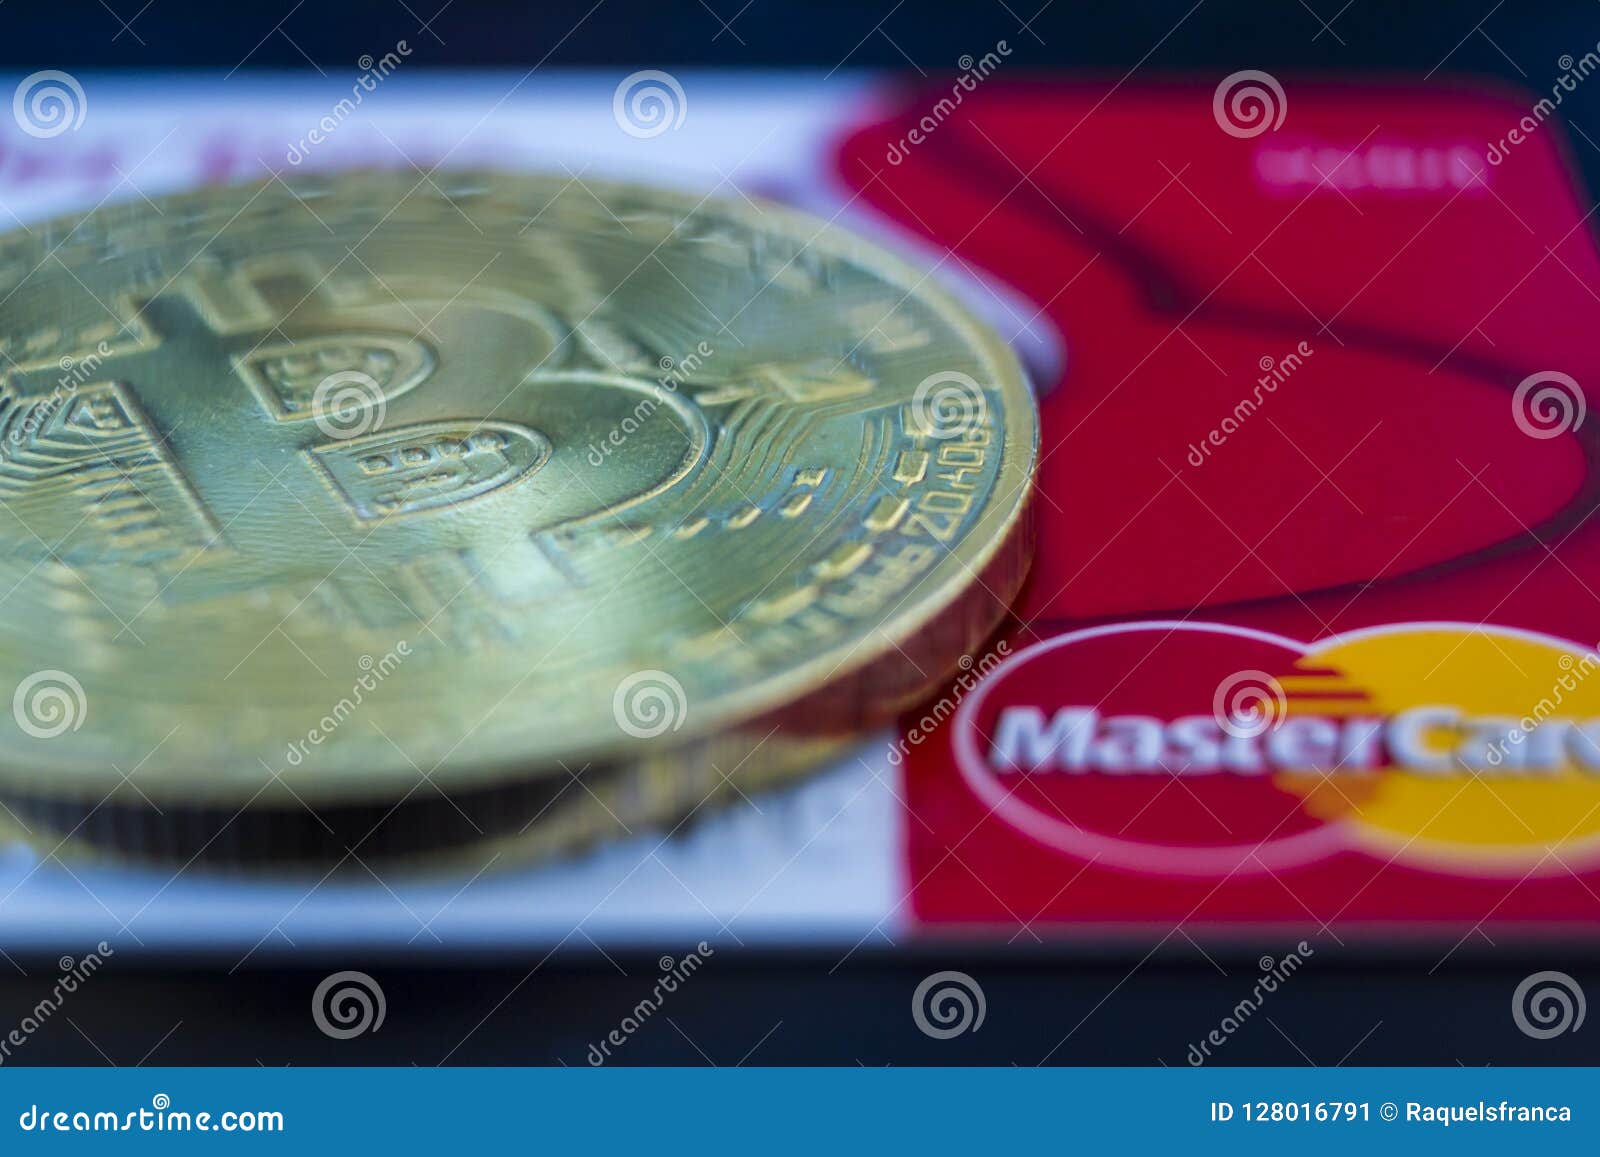 Bitcoin and Mastercard editorial photo. Image of ...